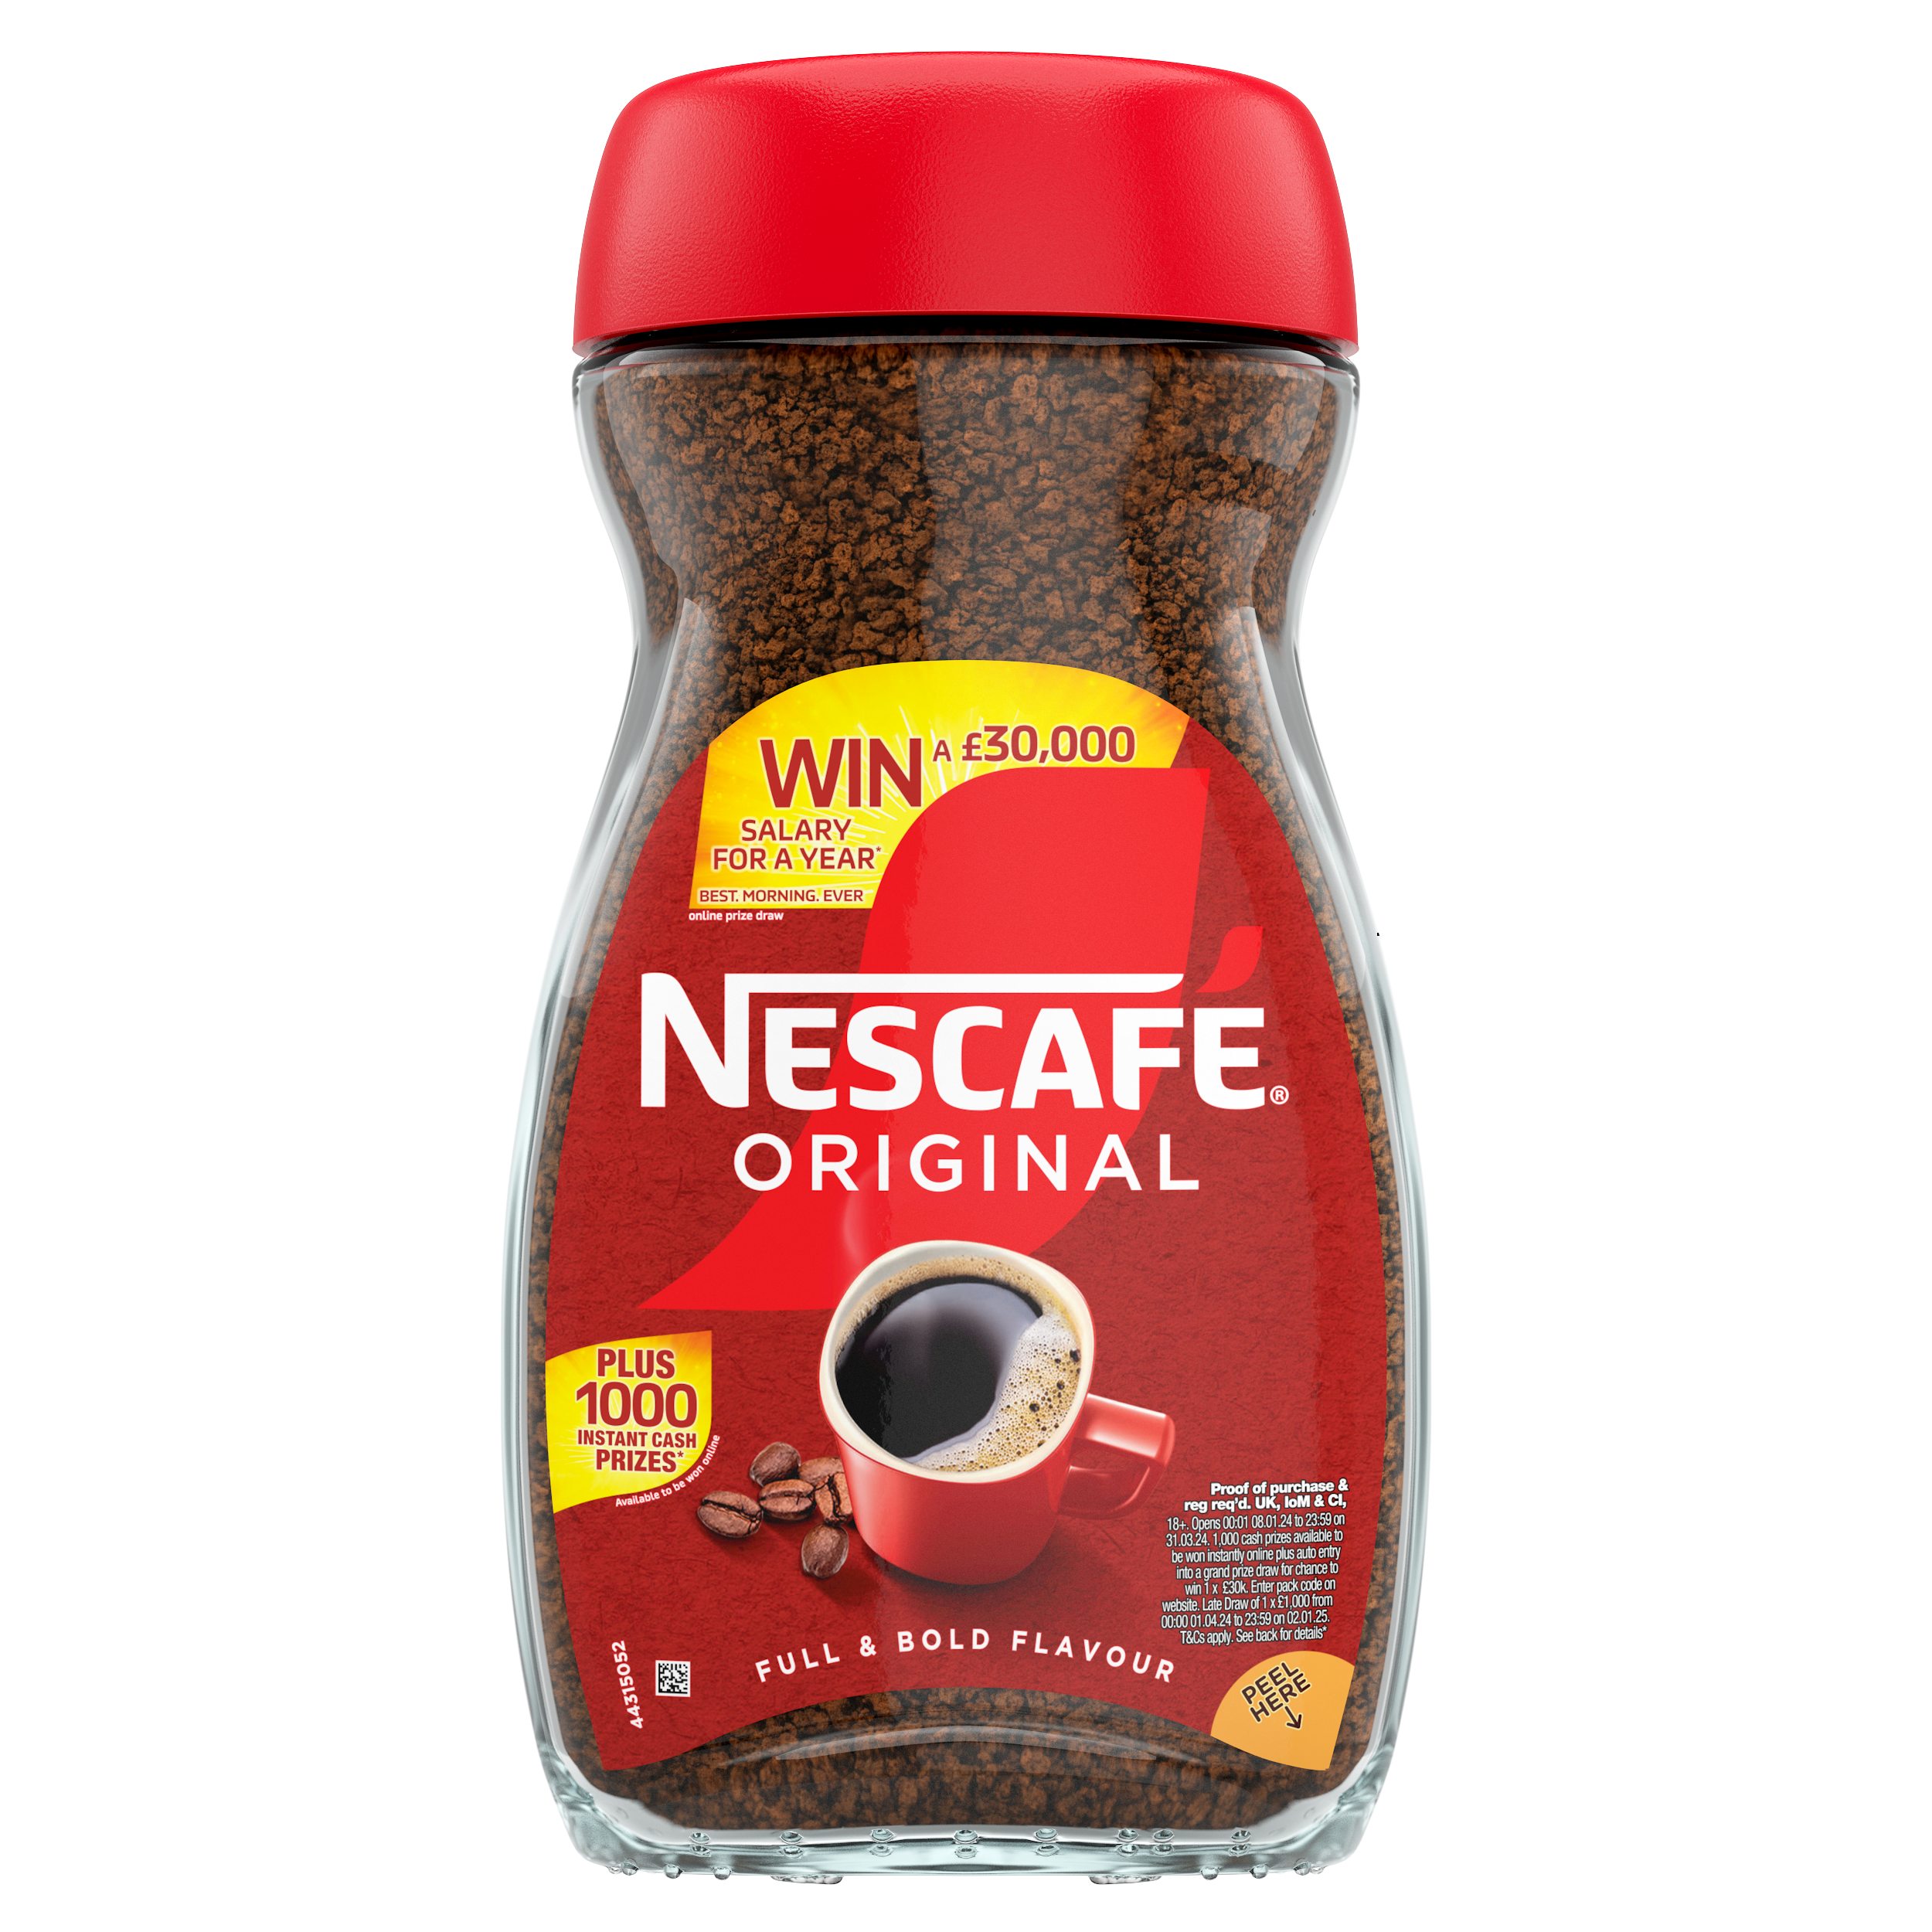 Nescafe Original Win A Salary Pack